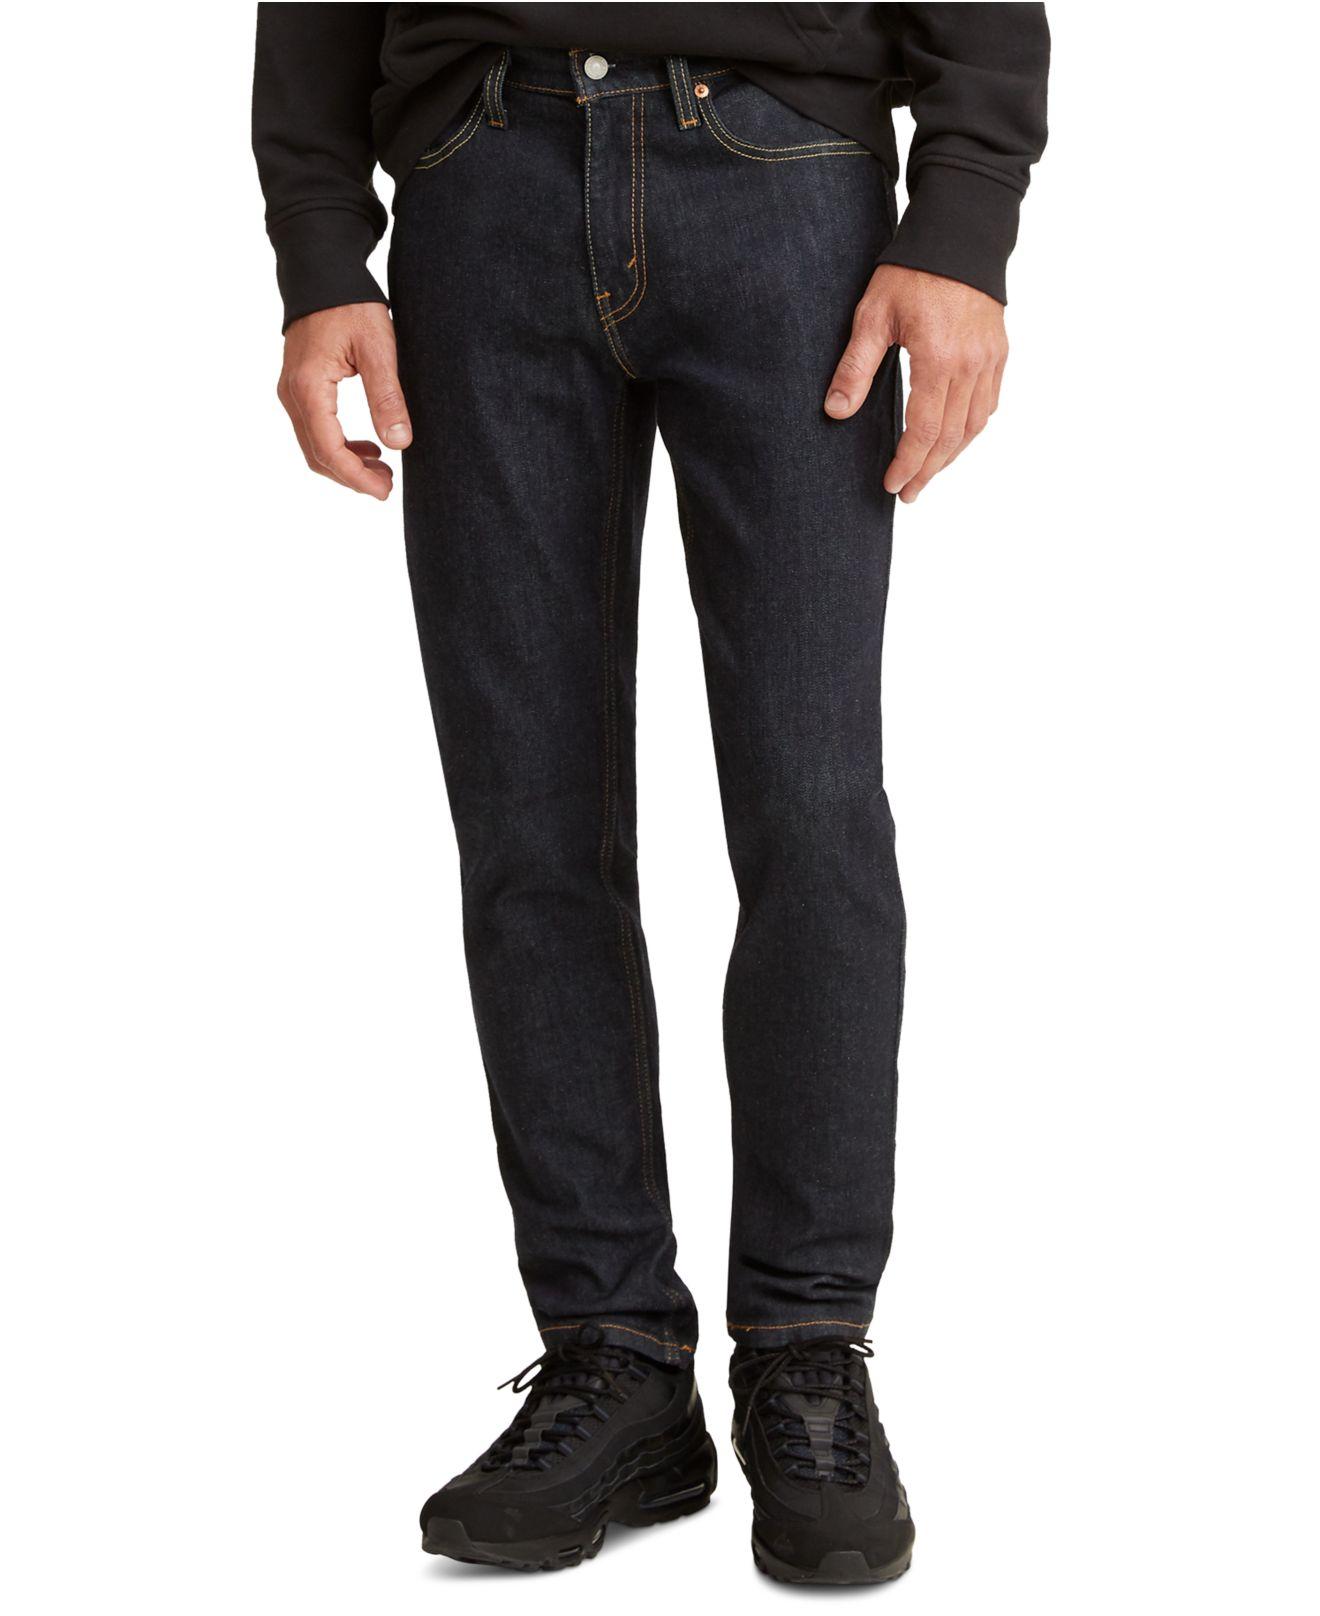 Levi's Denim 531 Athletic Slim-fit Jeans in Black for Men - Lyst